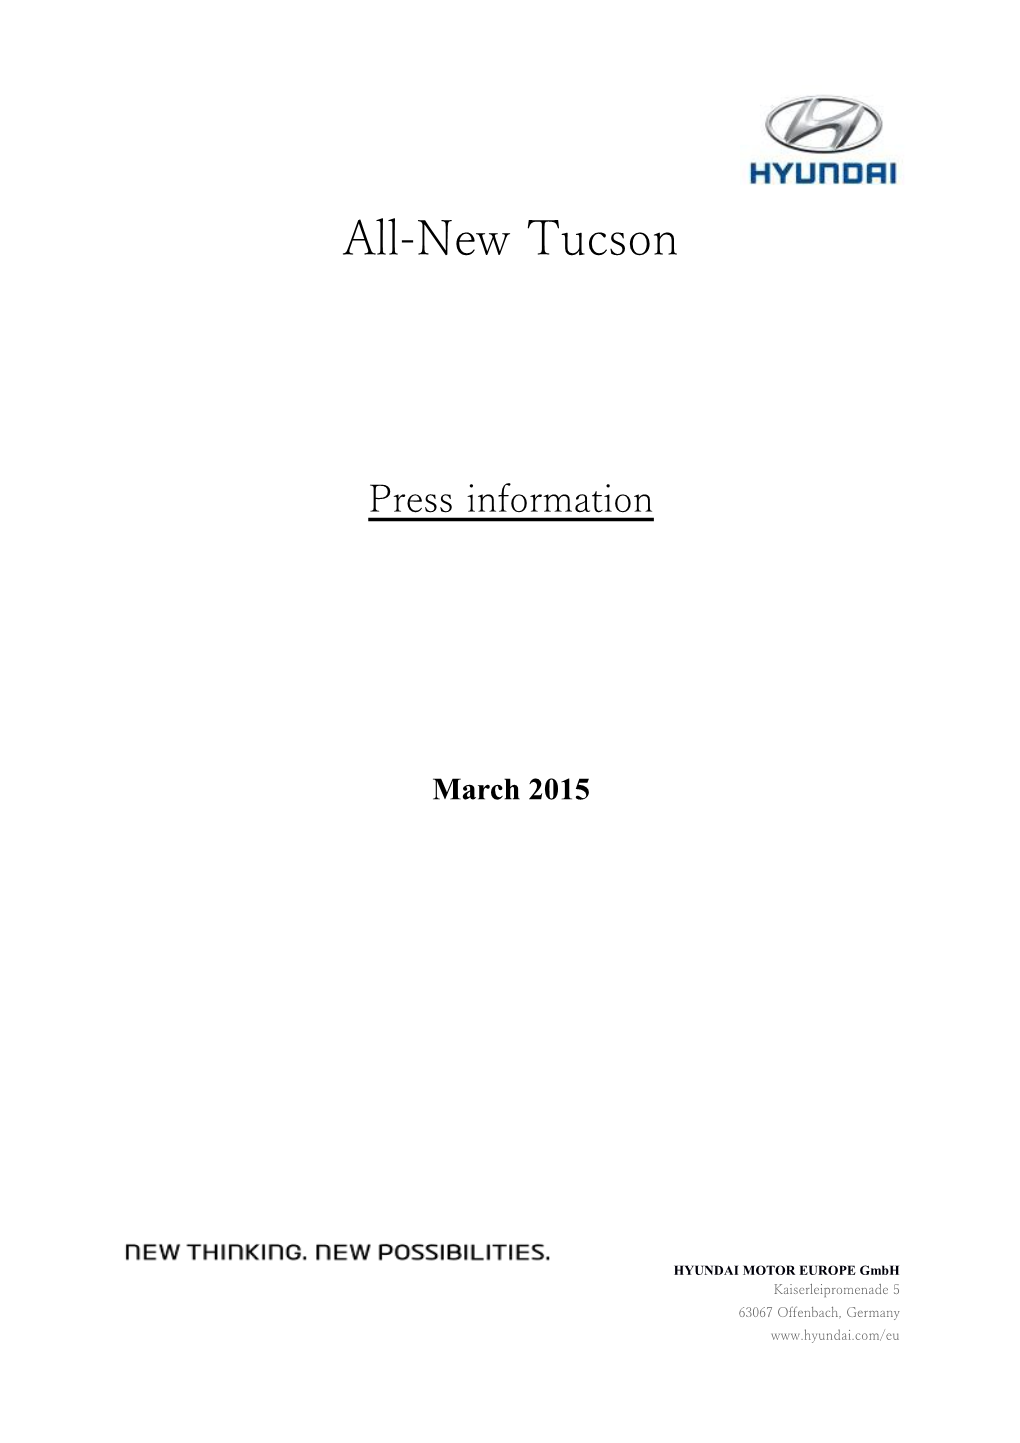 All-New Tucson Shifting Perceptions